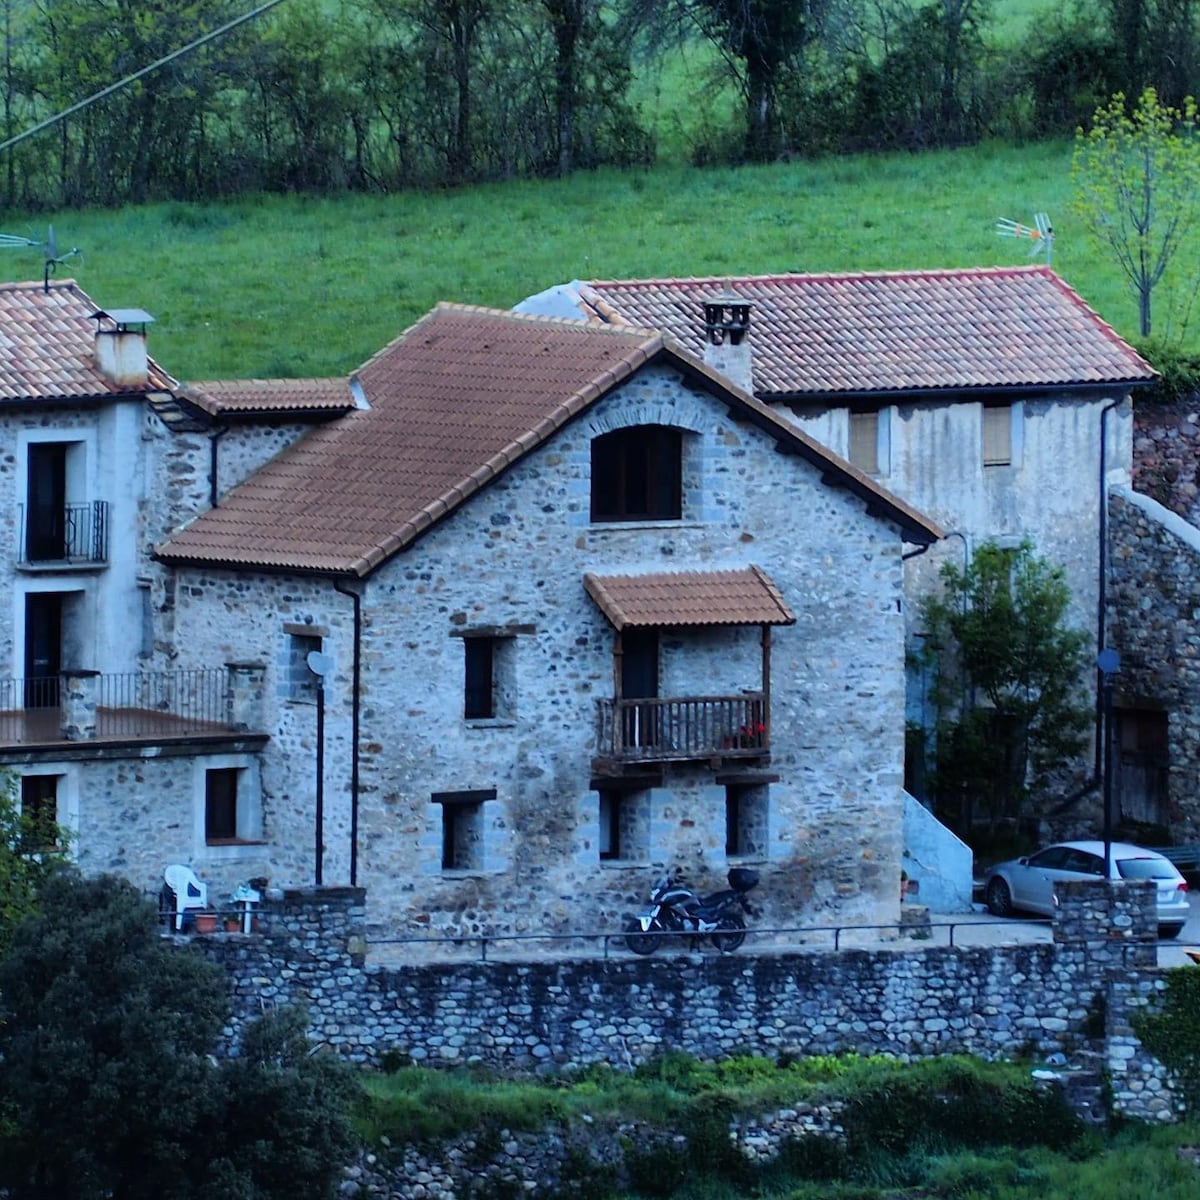 Casa rural del siglo XVI